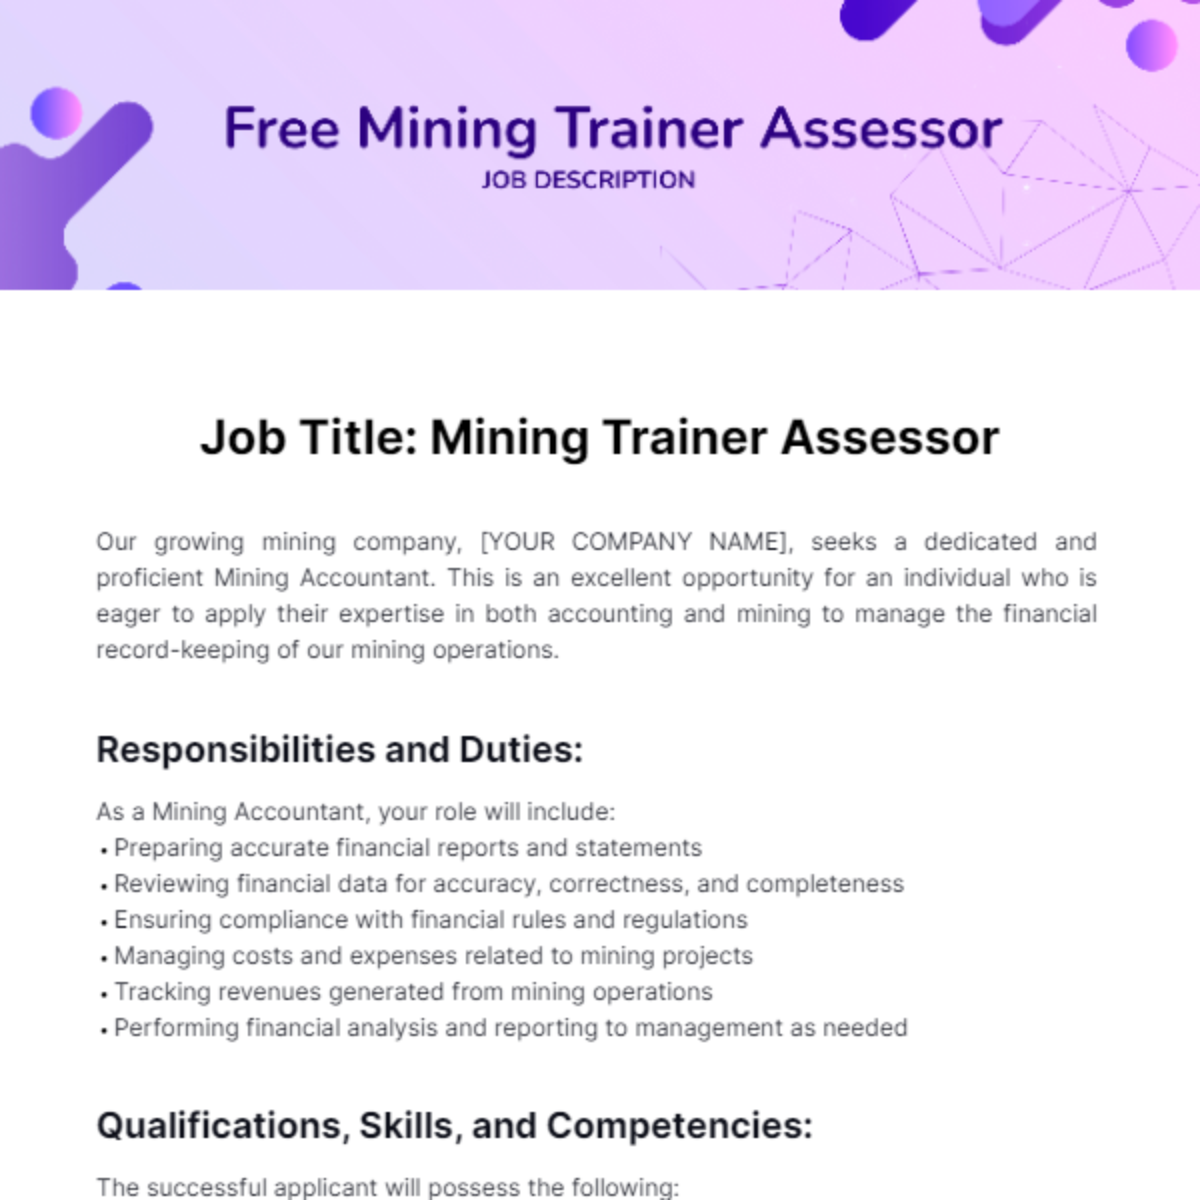 Free Mining Trainer Assessor Job Description Template